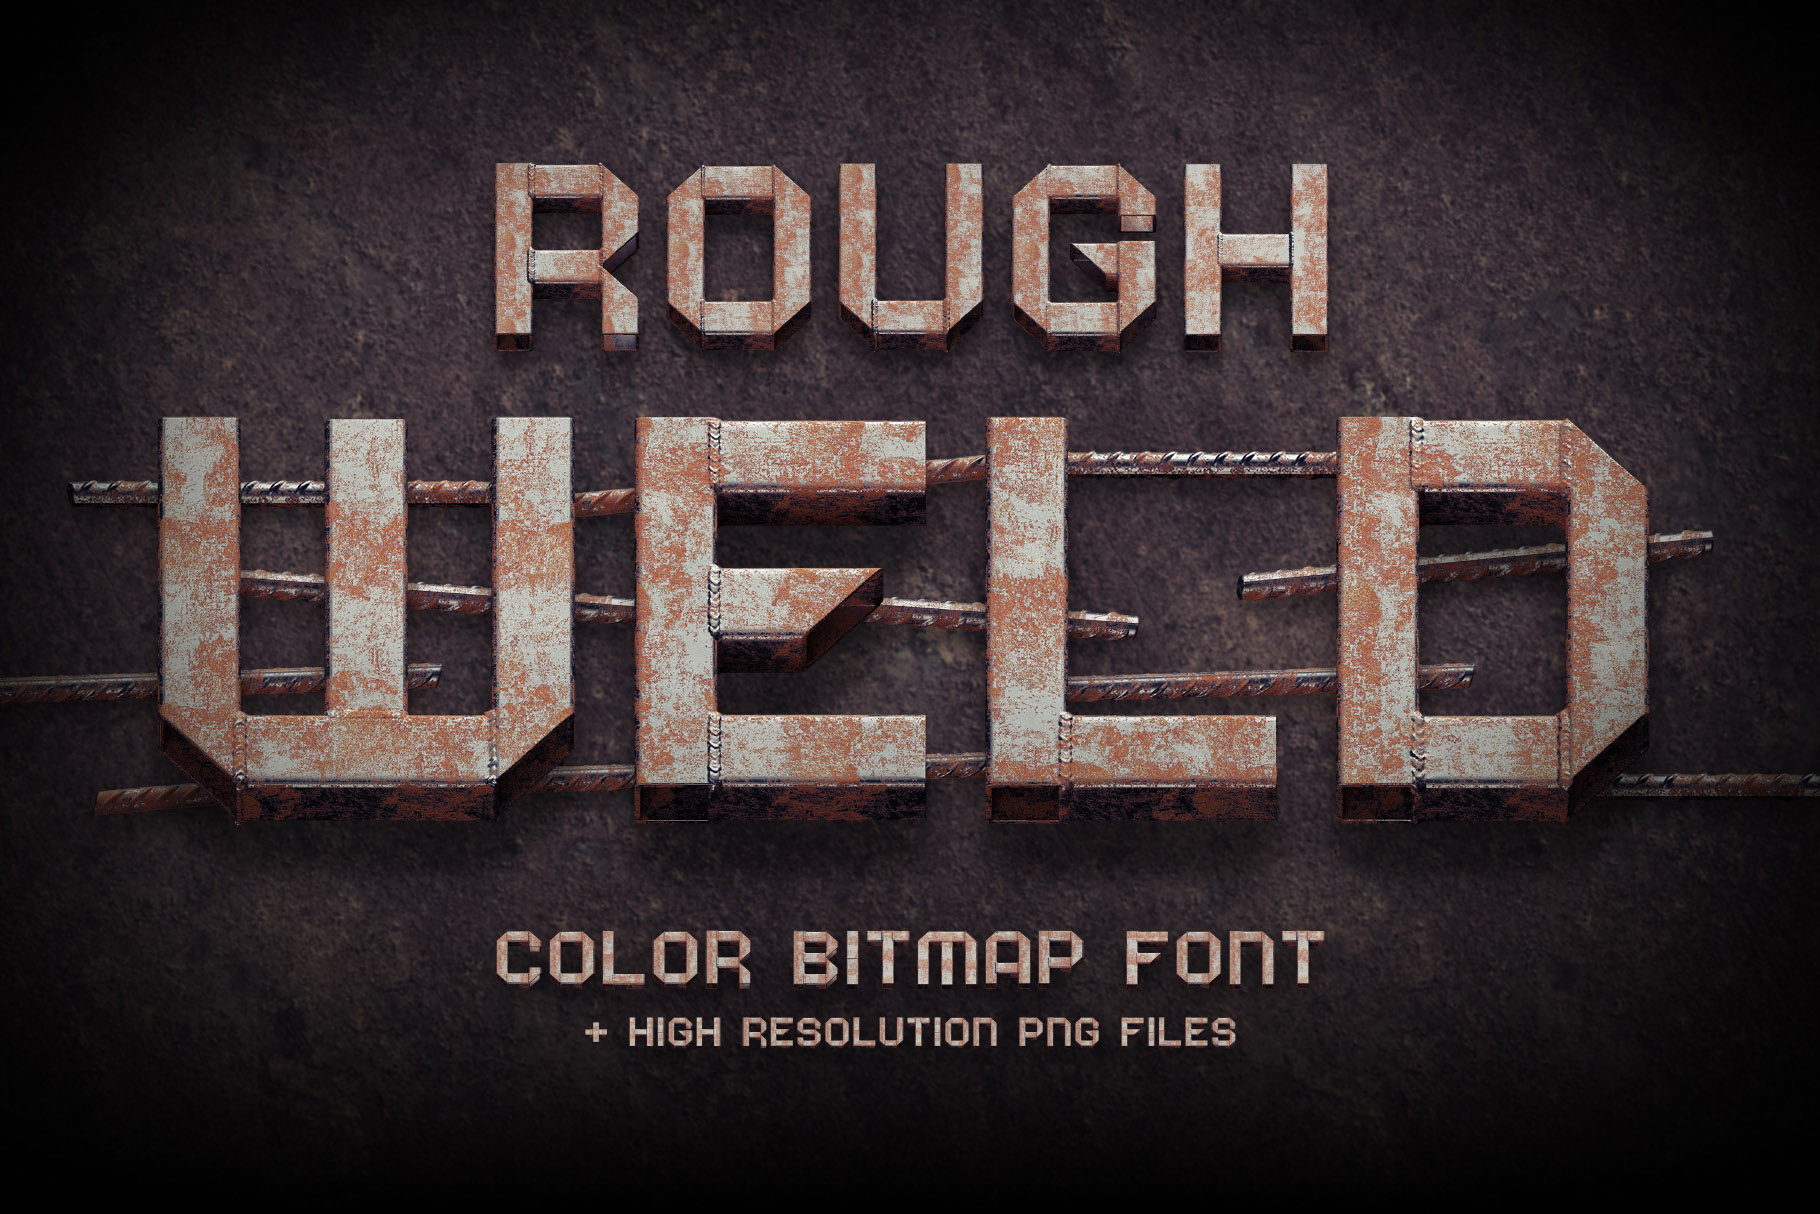 Rough Weld – Color Bitmap Font facebook image.